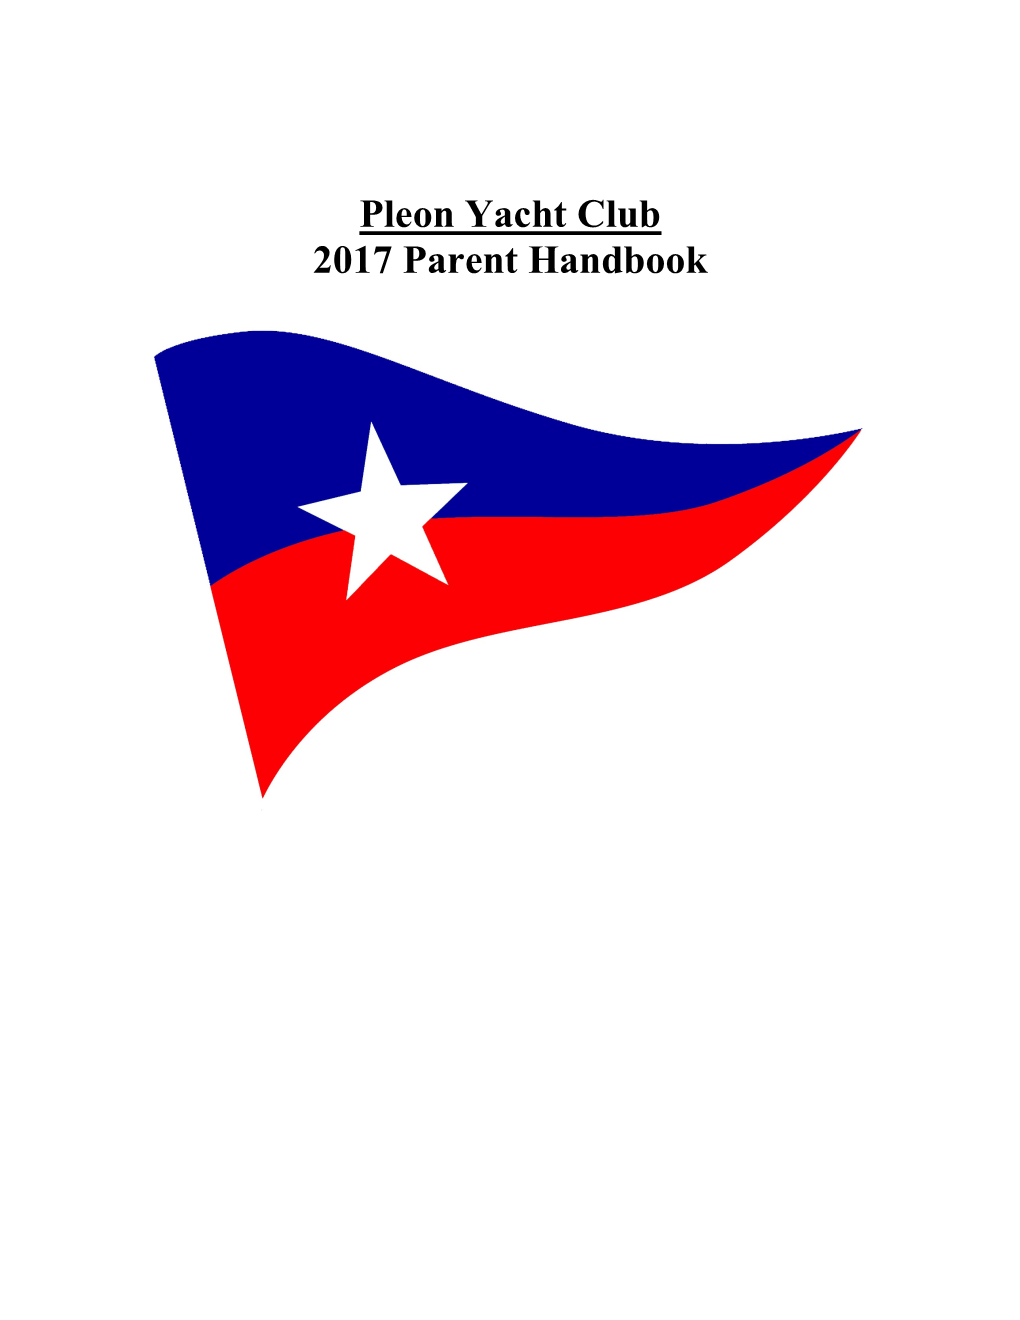 Pleon Yacht Club 2017 Parent Handbook